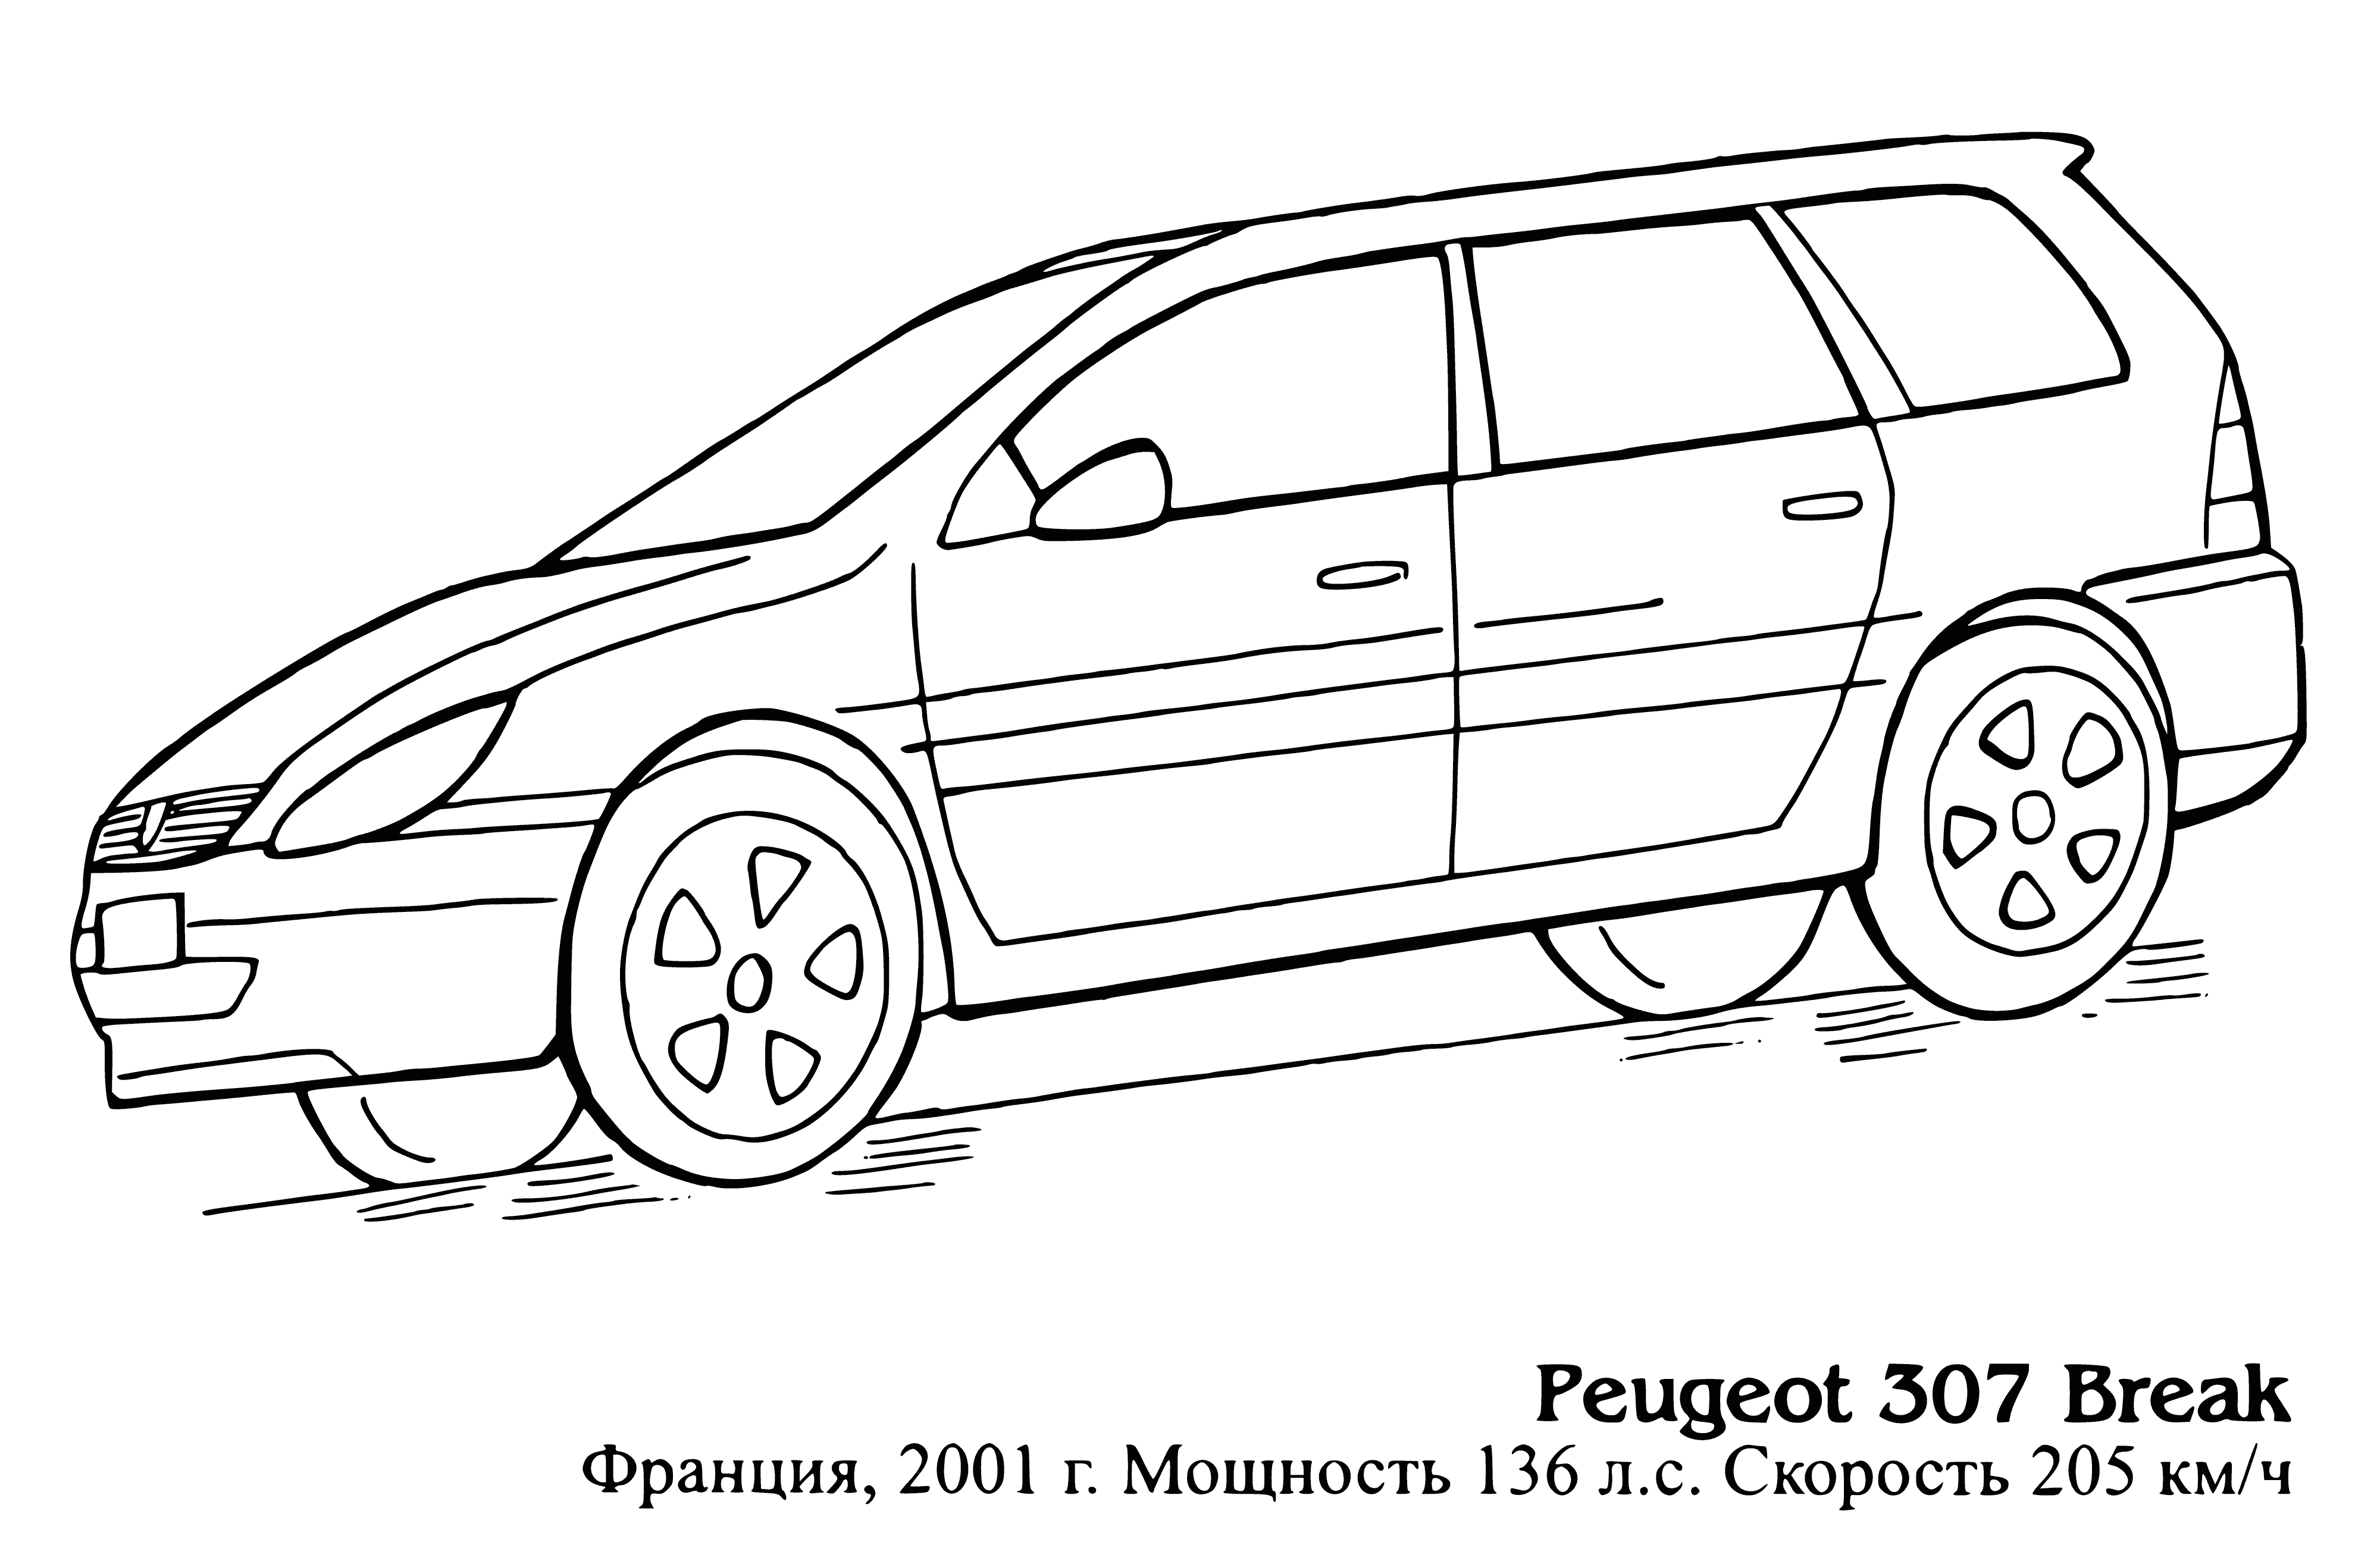 Peugeot 307 Break coloring page